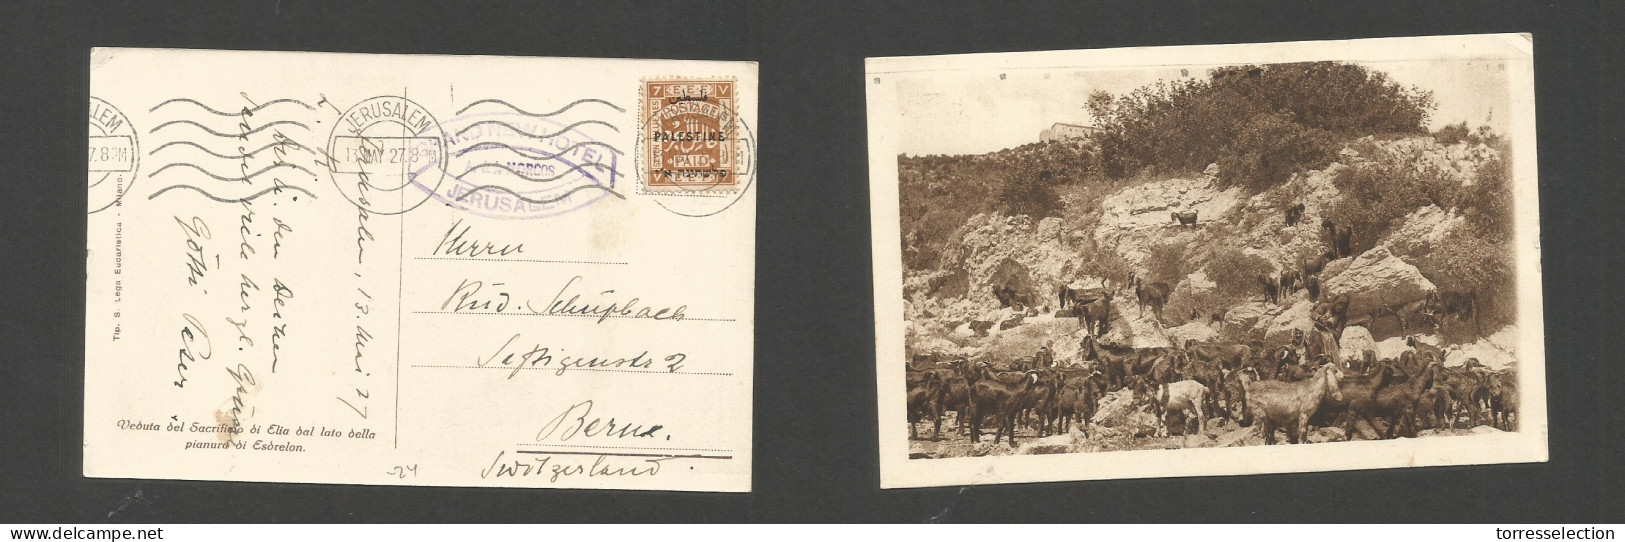 PALESTINE. 1927 (13 May) Jerusalem - Switzerland, Bern. Fkd Ppc. Gorts At Esbrelon. Ovptd Issue Rolling Cachet. SALE. - Palestine